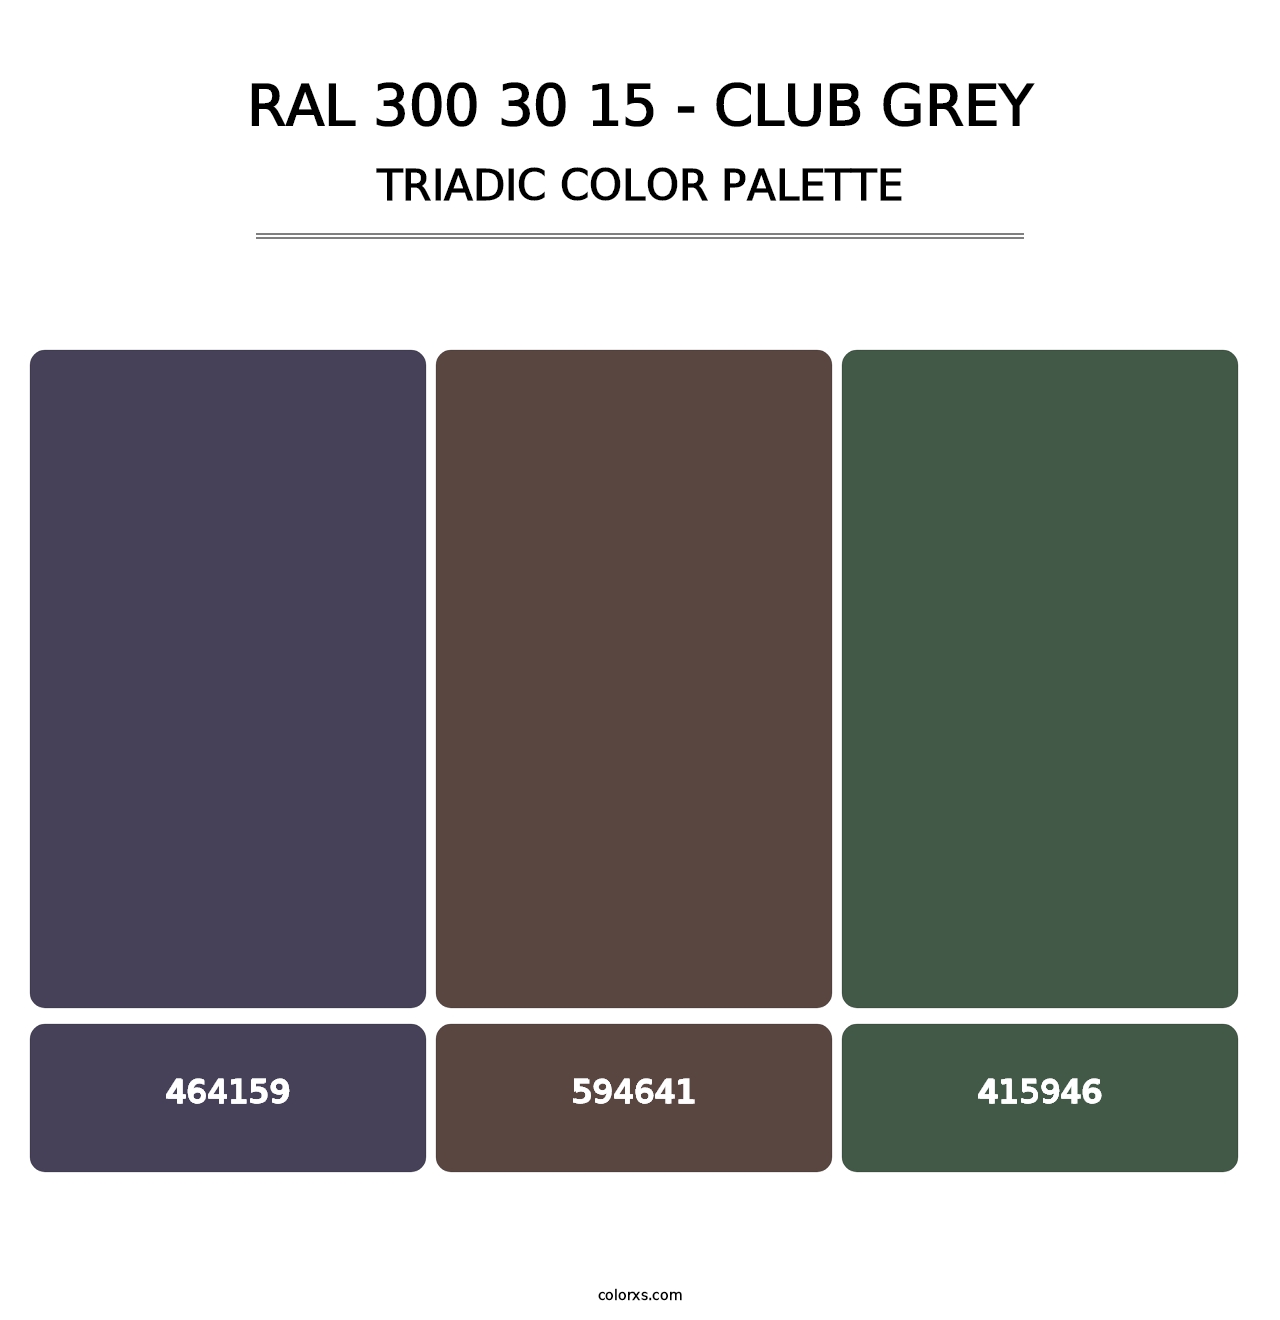 RAL 300 30 15 - Club Grey - Triadic Color Palette